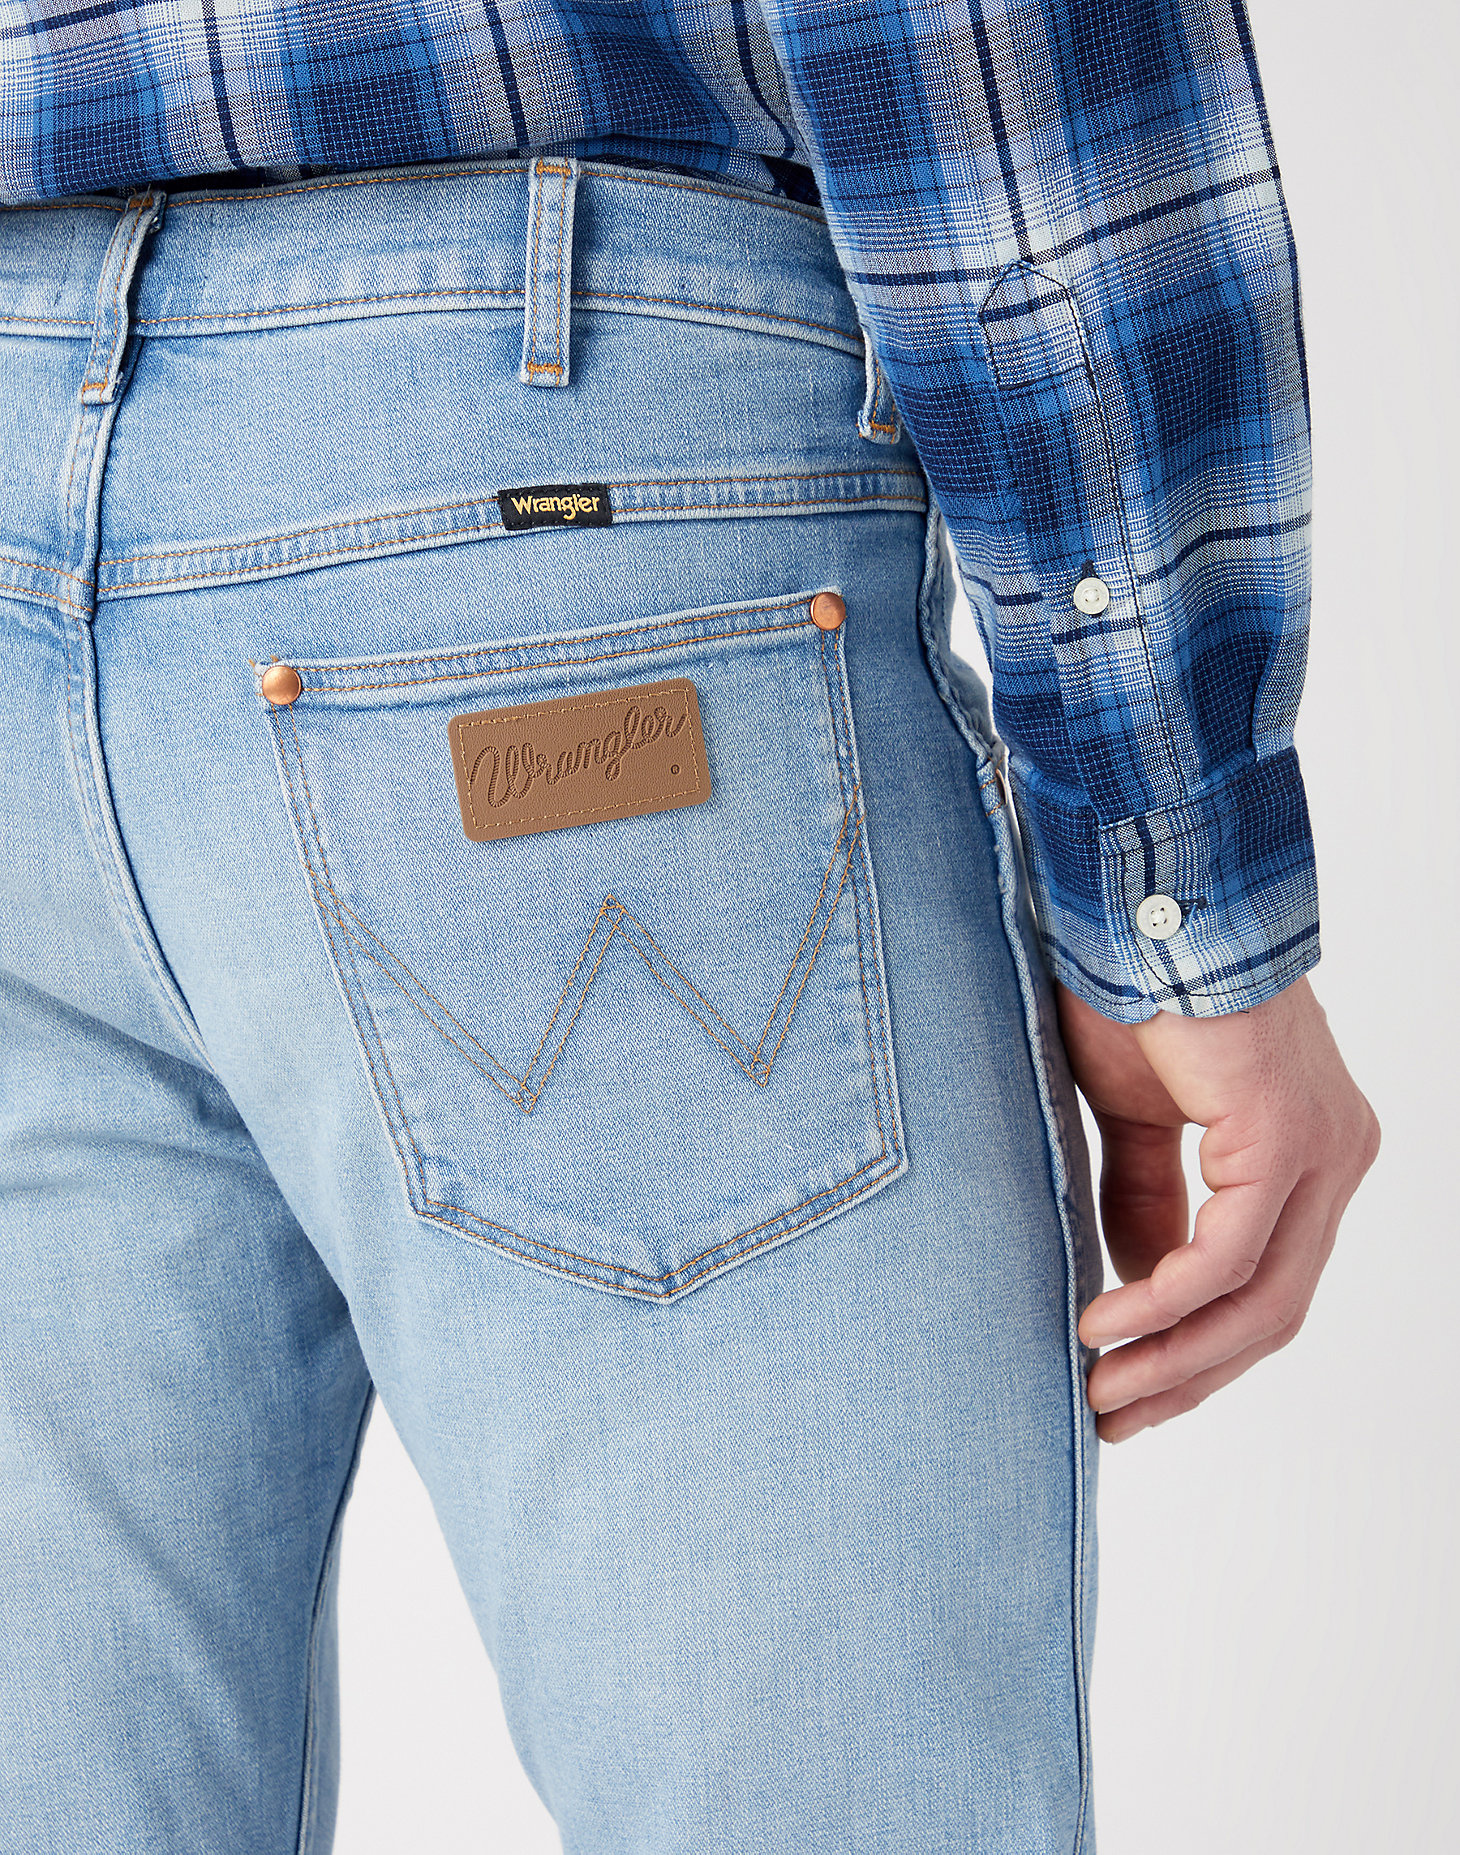 Indigood Icons 11MWZ Western Slim Jeans in Horizon alternative view 4